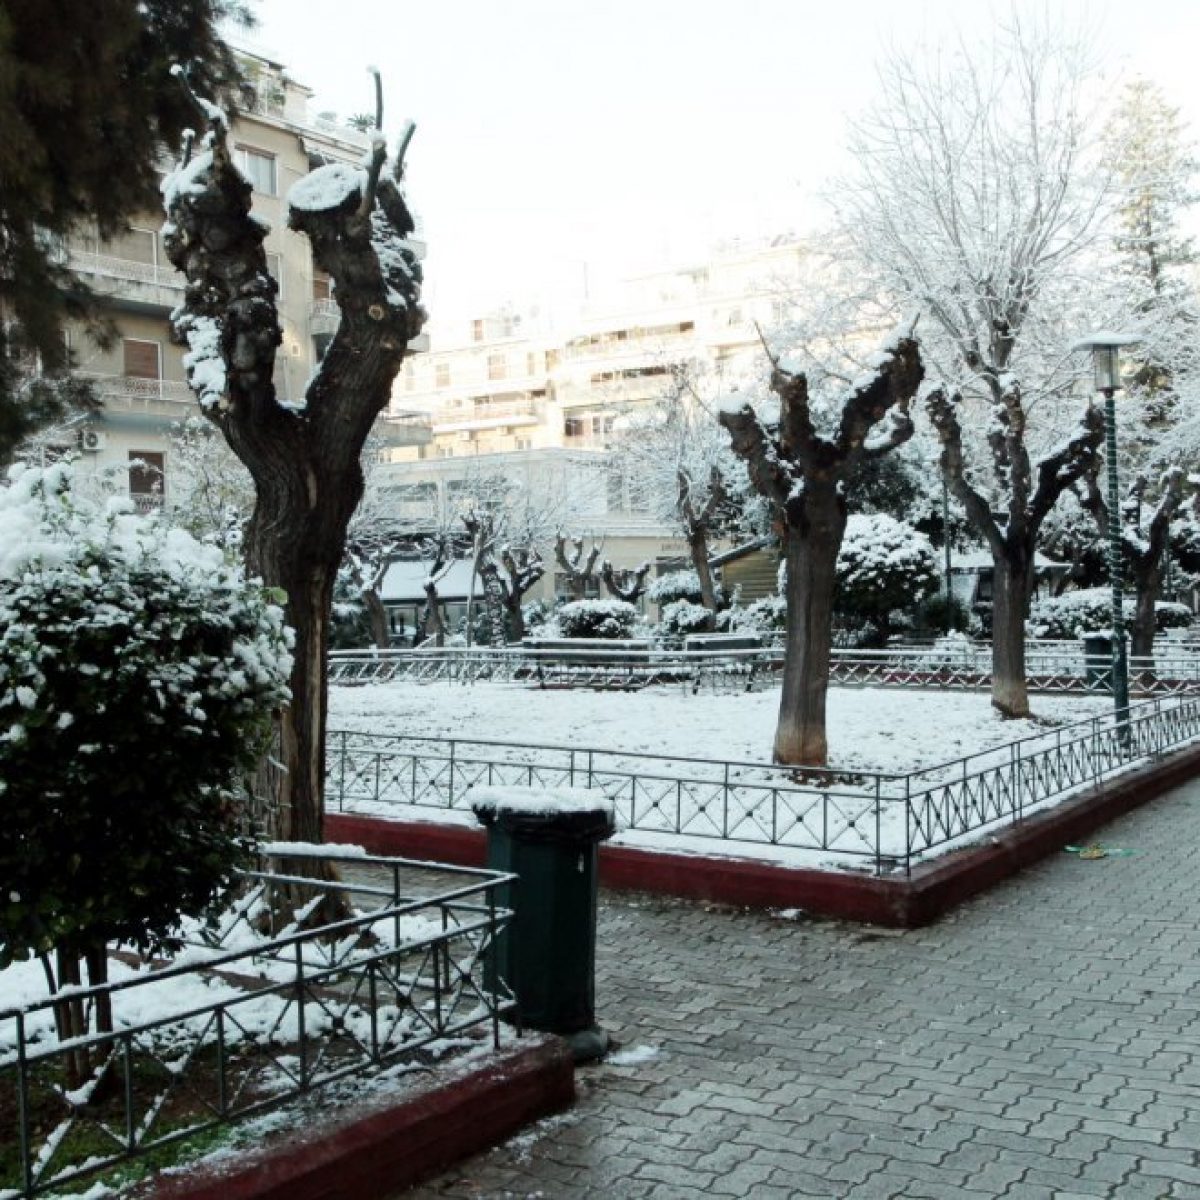 Xιονίζει τώρα σε πολλες περιοχές στην Αθήνα: Νιφάδες σε Μοναστηράκι, Νίκαια, Πετρούπολη και έρχονται και άλλες